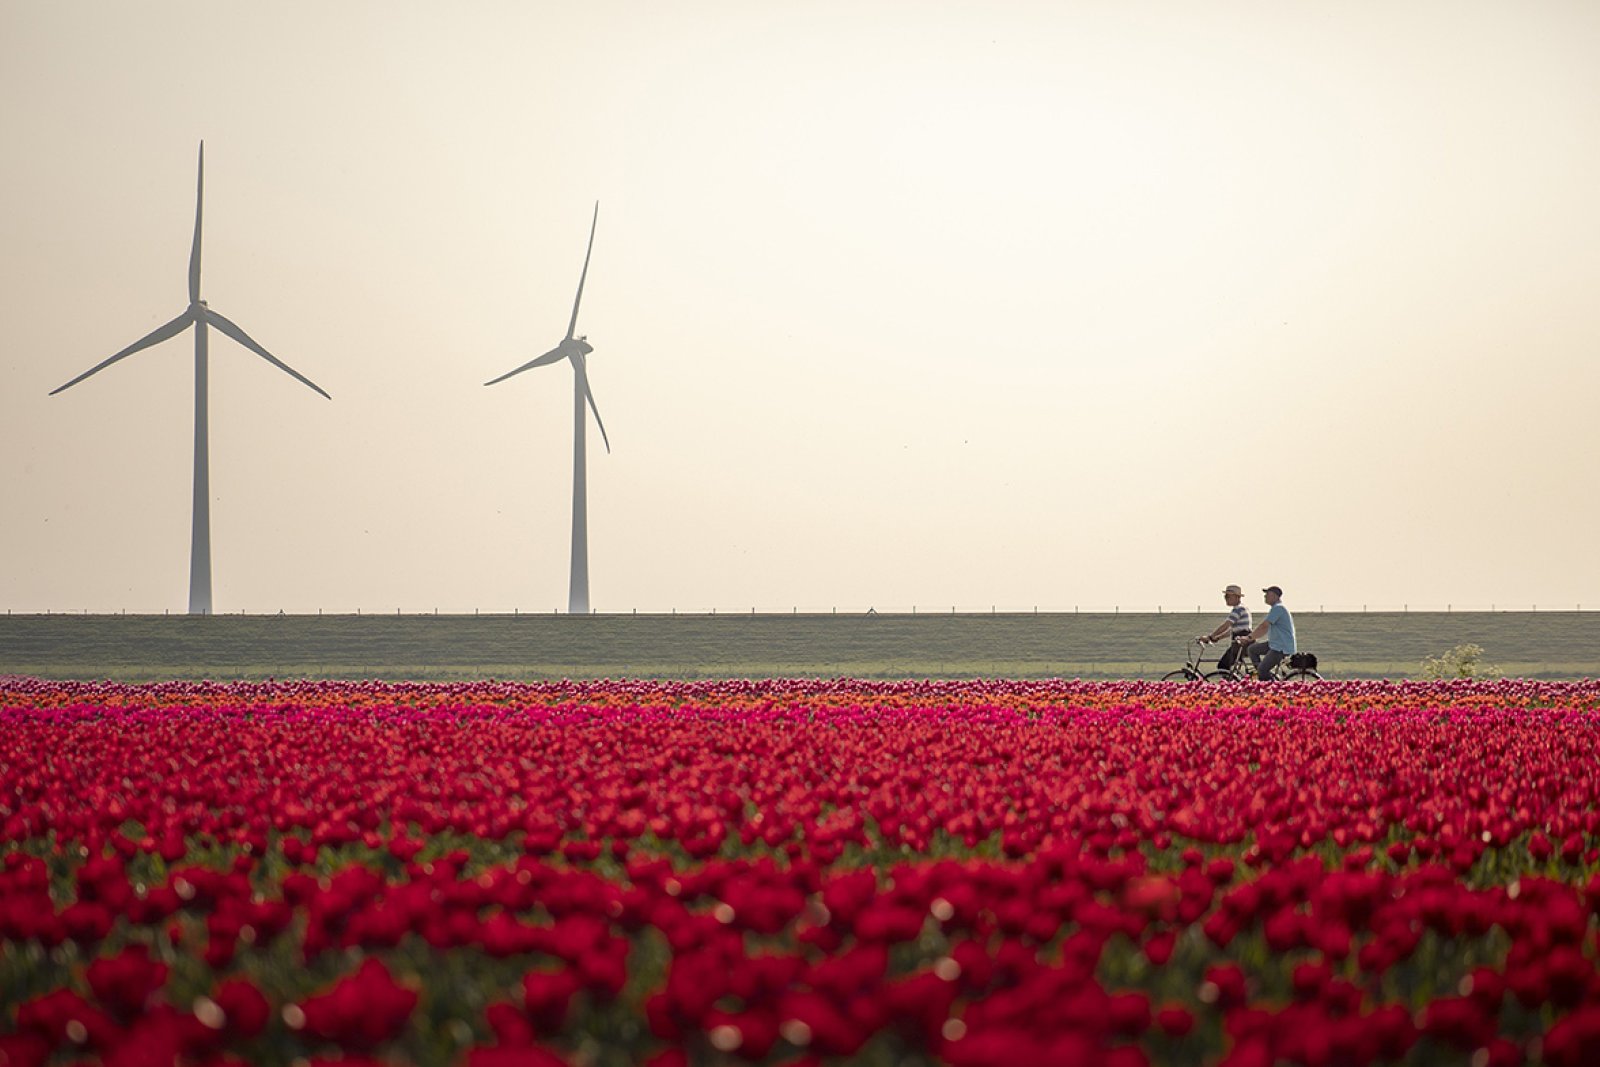 Biking through Dutch scenery